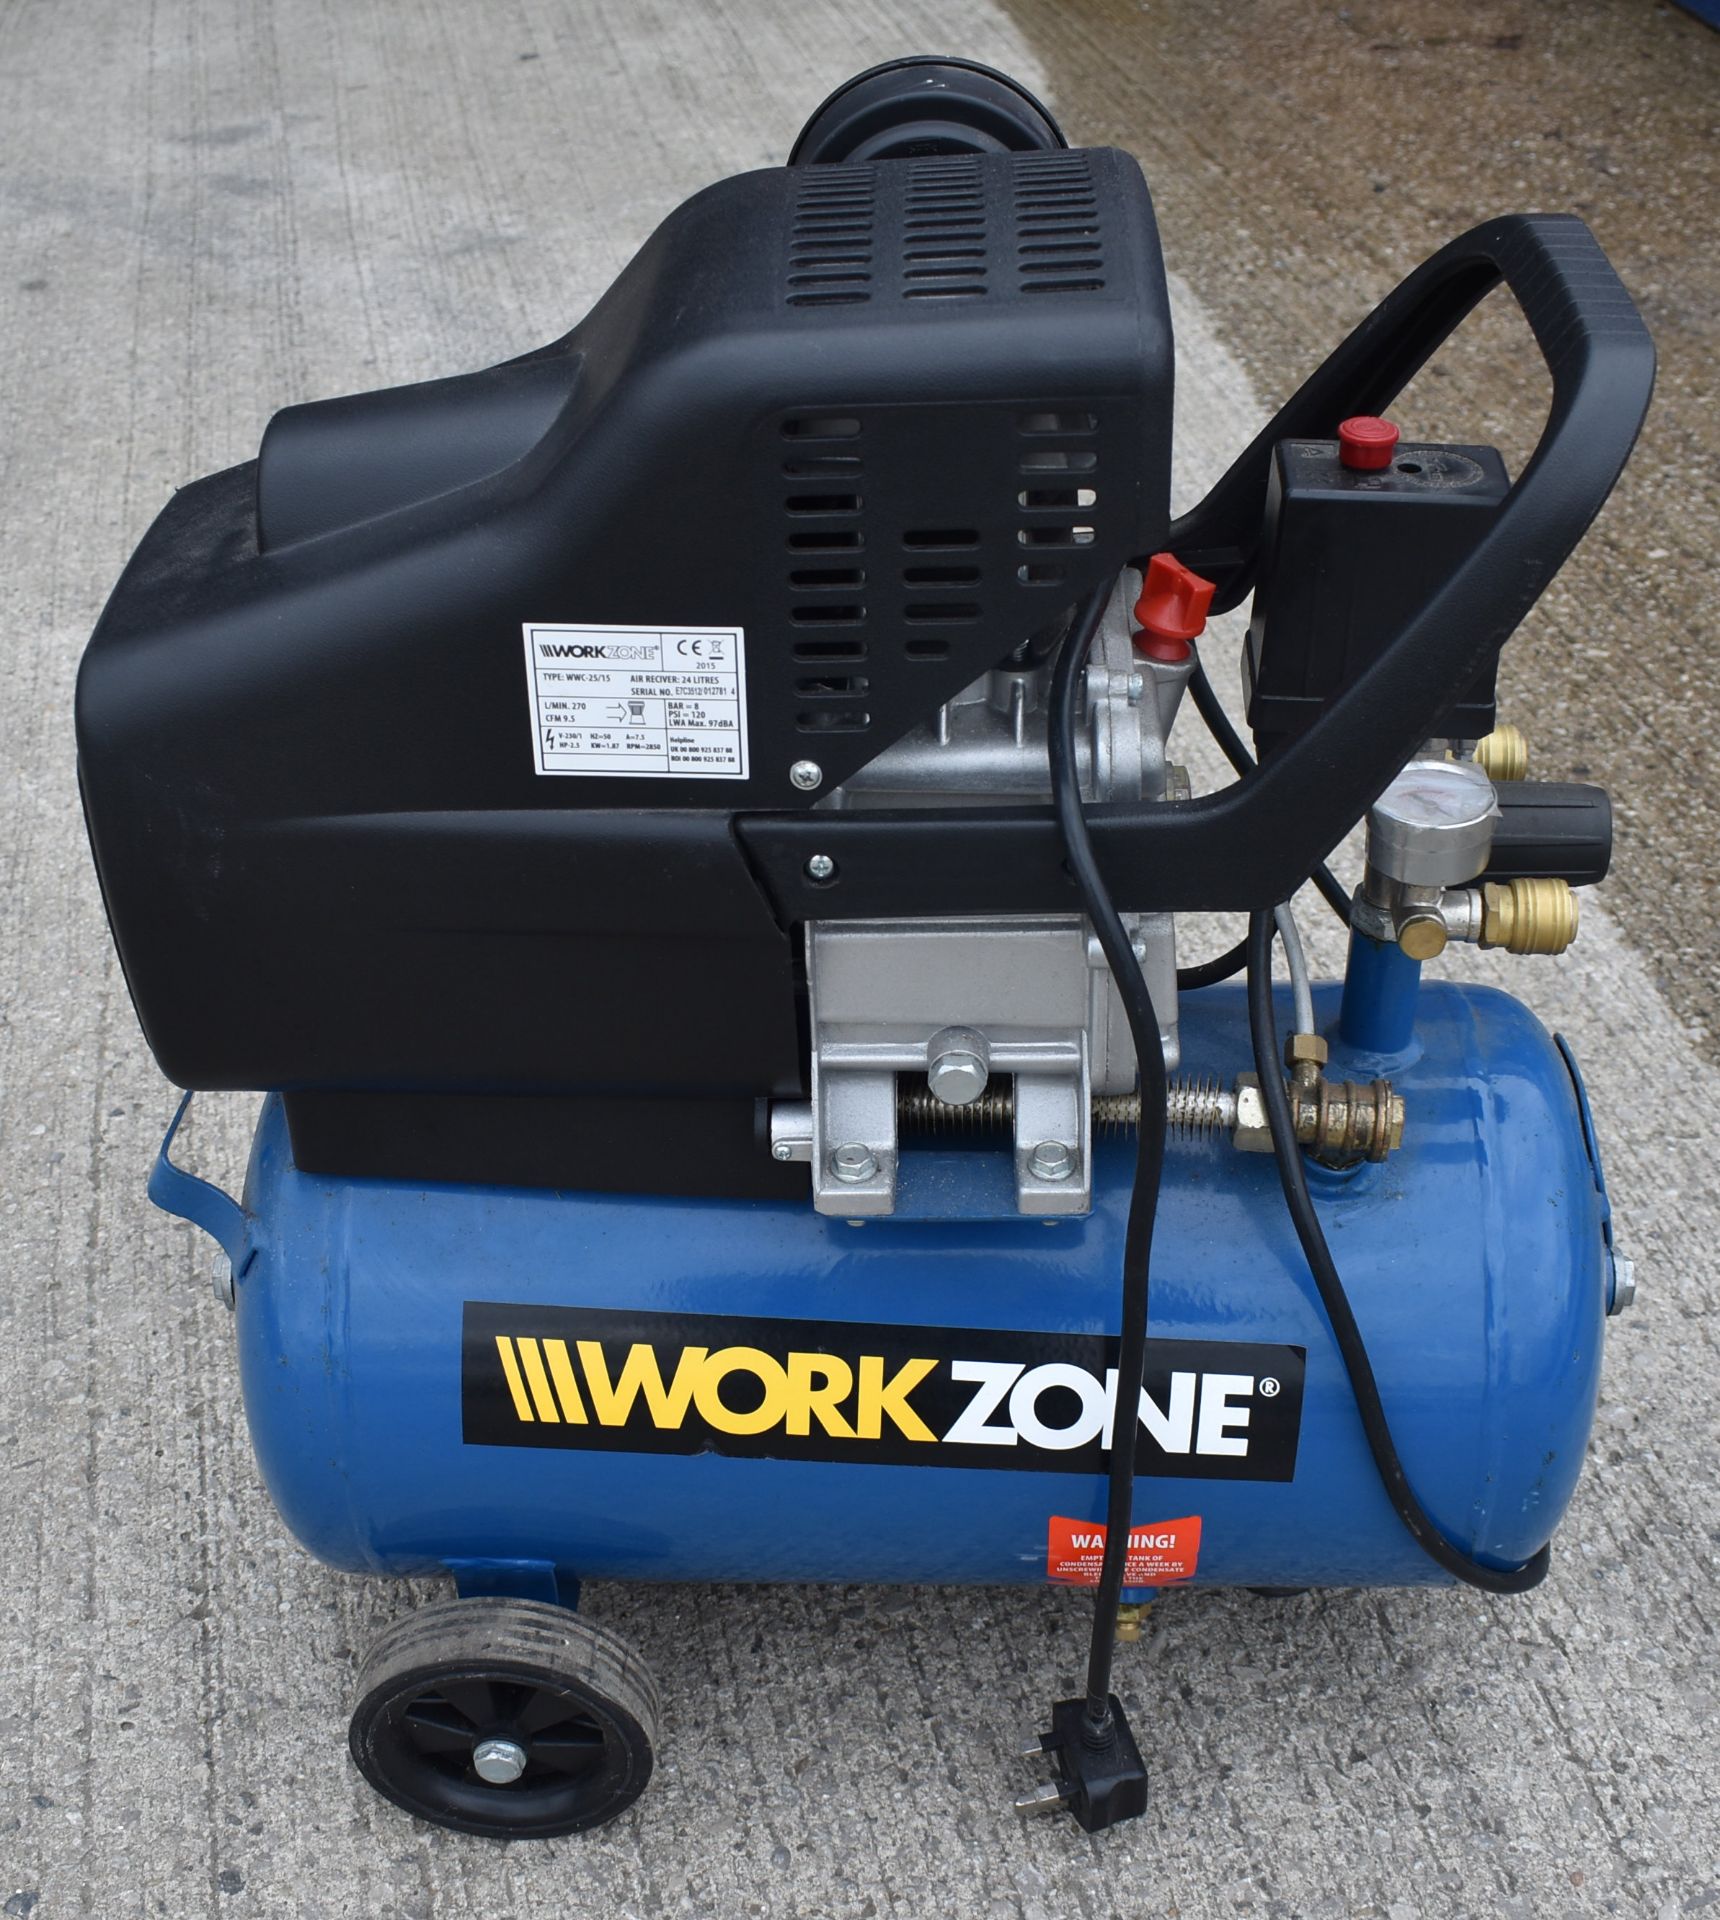 1 x WORKZONE Wwc 25/15 Air Compressor - 24L Receiver, 2.5Hp - RRP £190 - Ref: K260 - CL905 - Locatio - Image 3 of 14